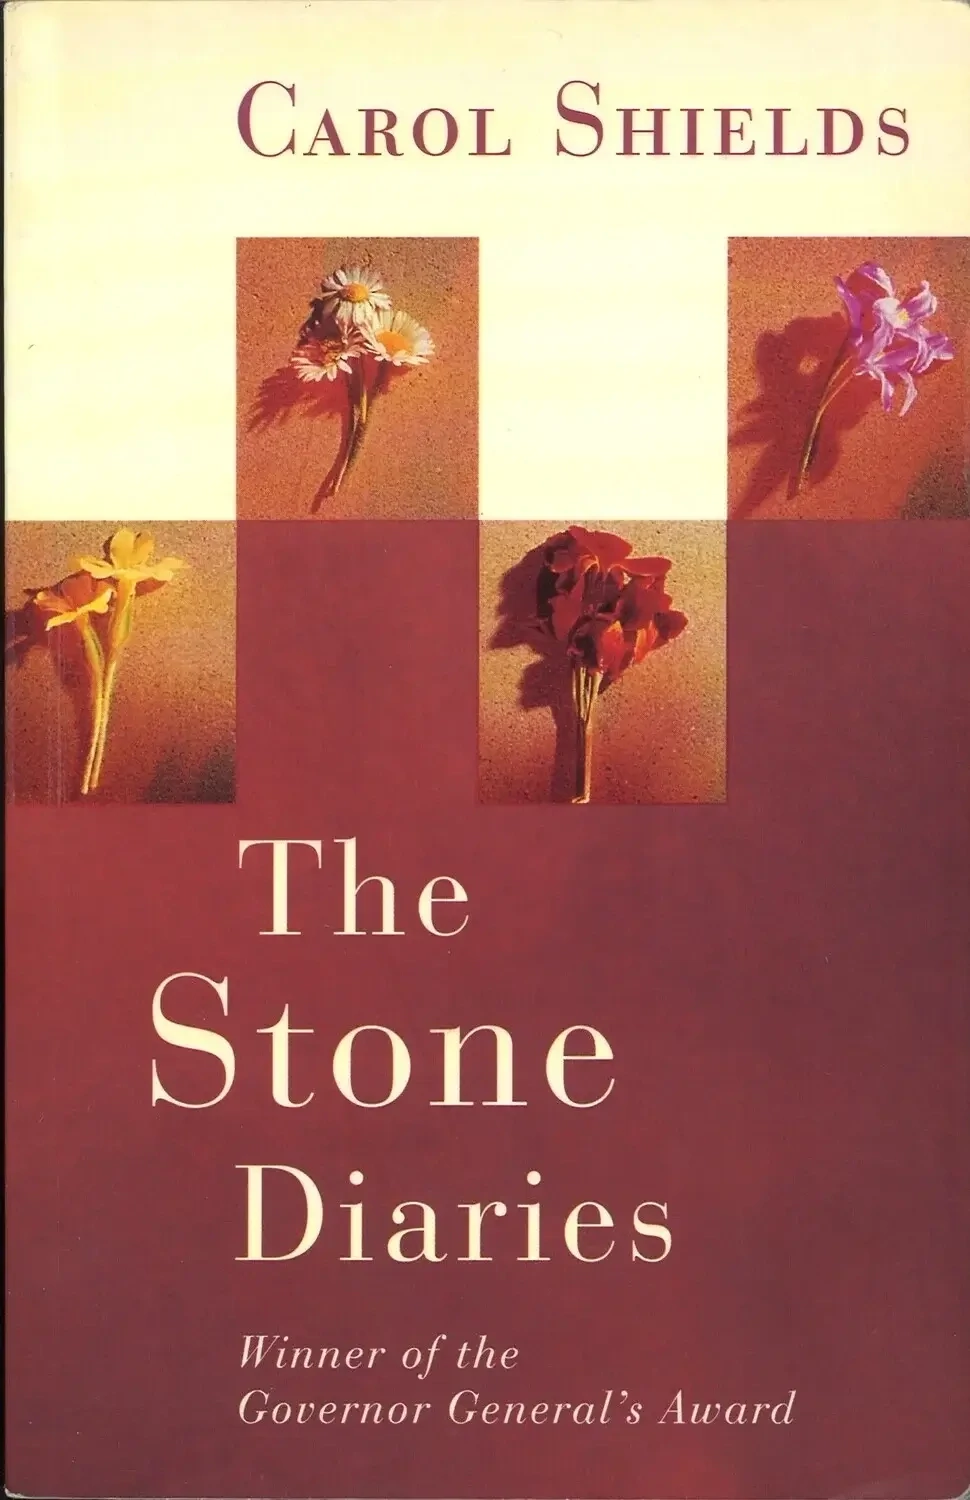 The Stone Diaries by Carol Shields,